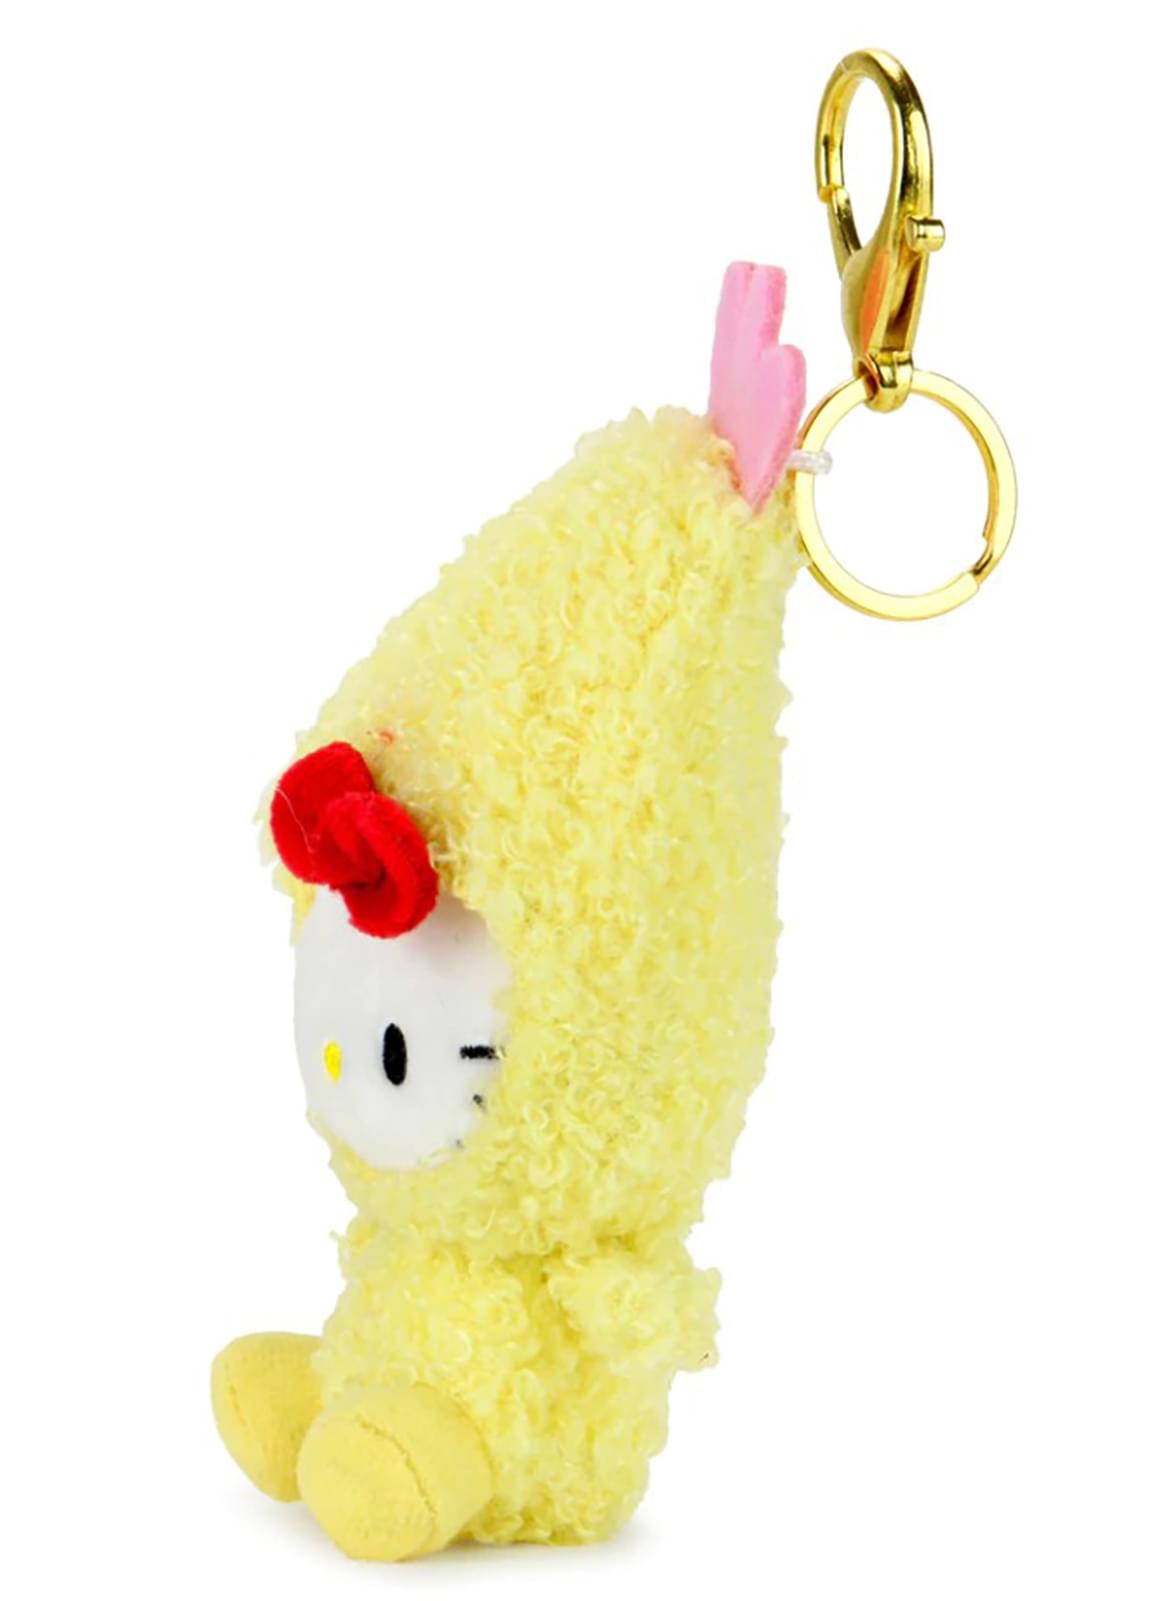 Hello Kitty x Nissin Cup Noodles Plush Charm Keychain | Tempura Kitty